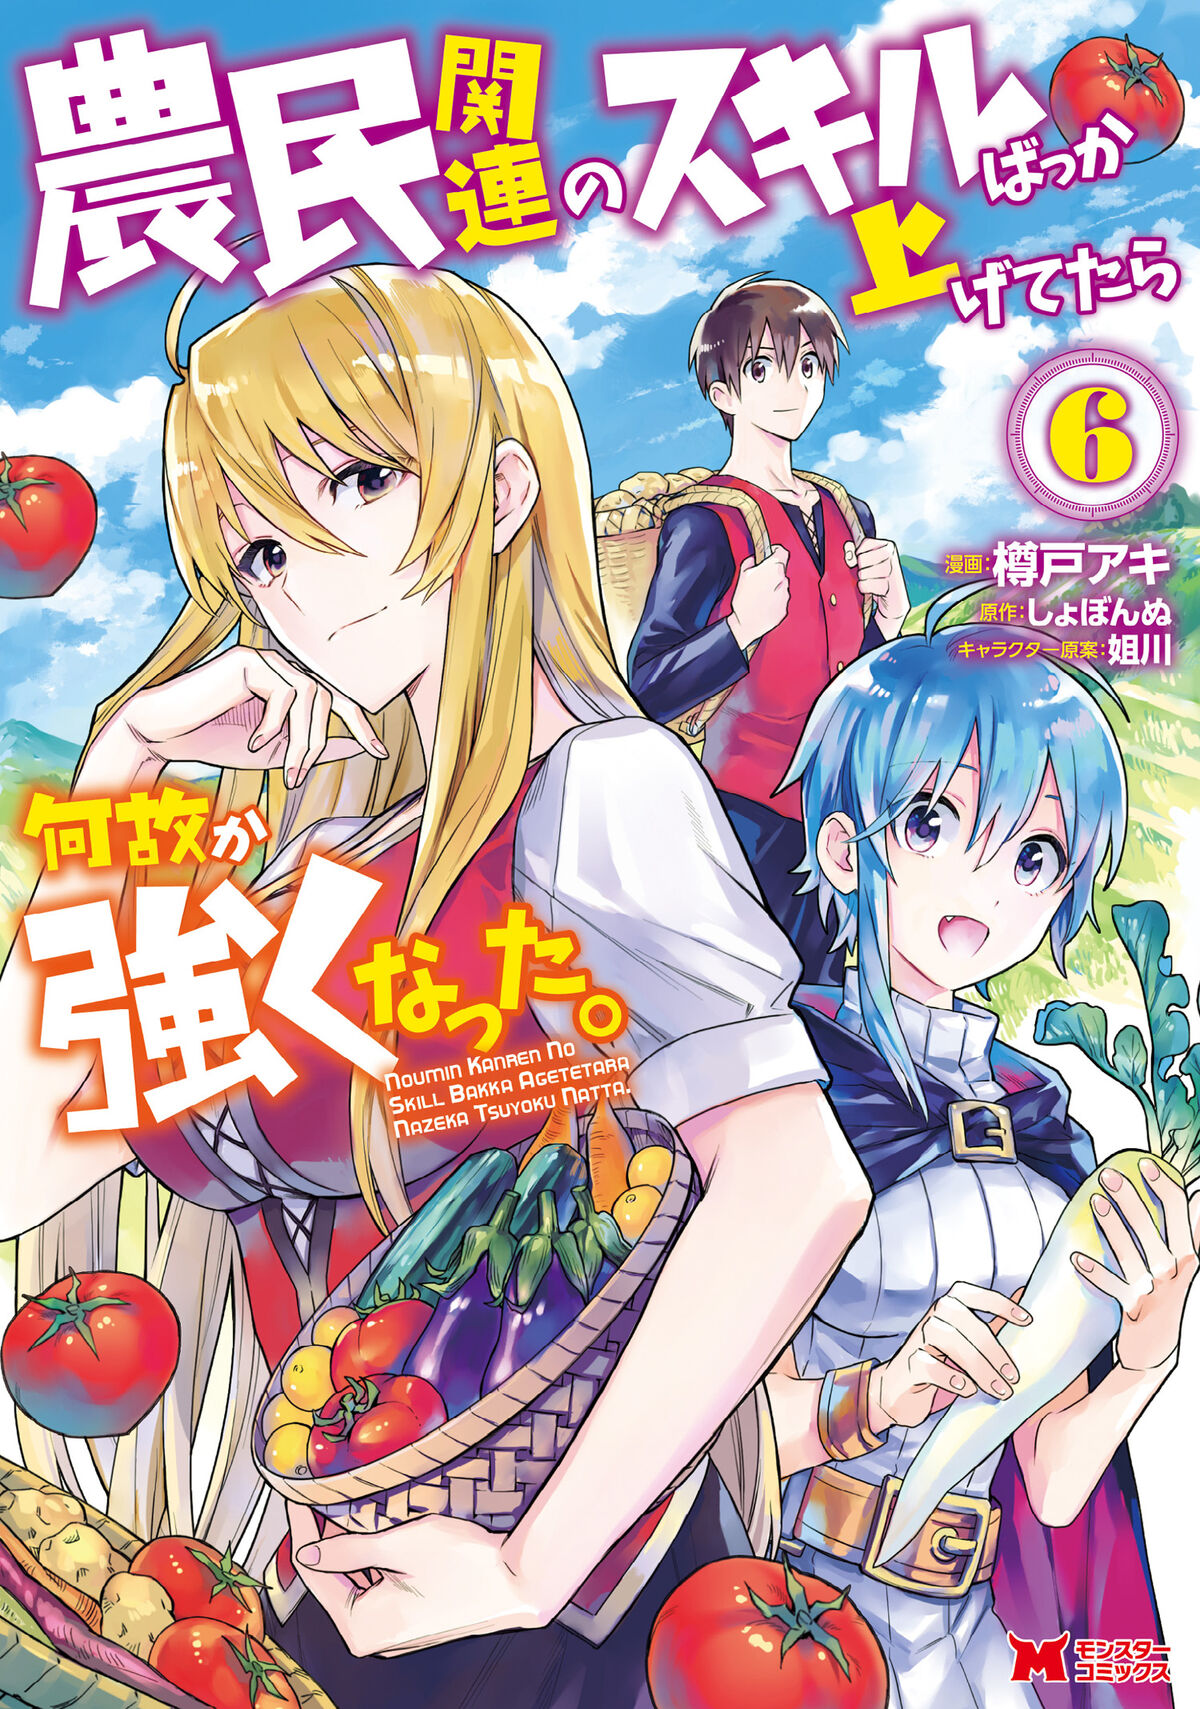 Light Novel Volume 5, Noumin Kanren no Skill Wiki